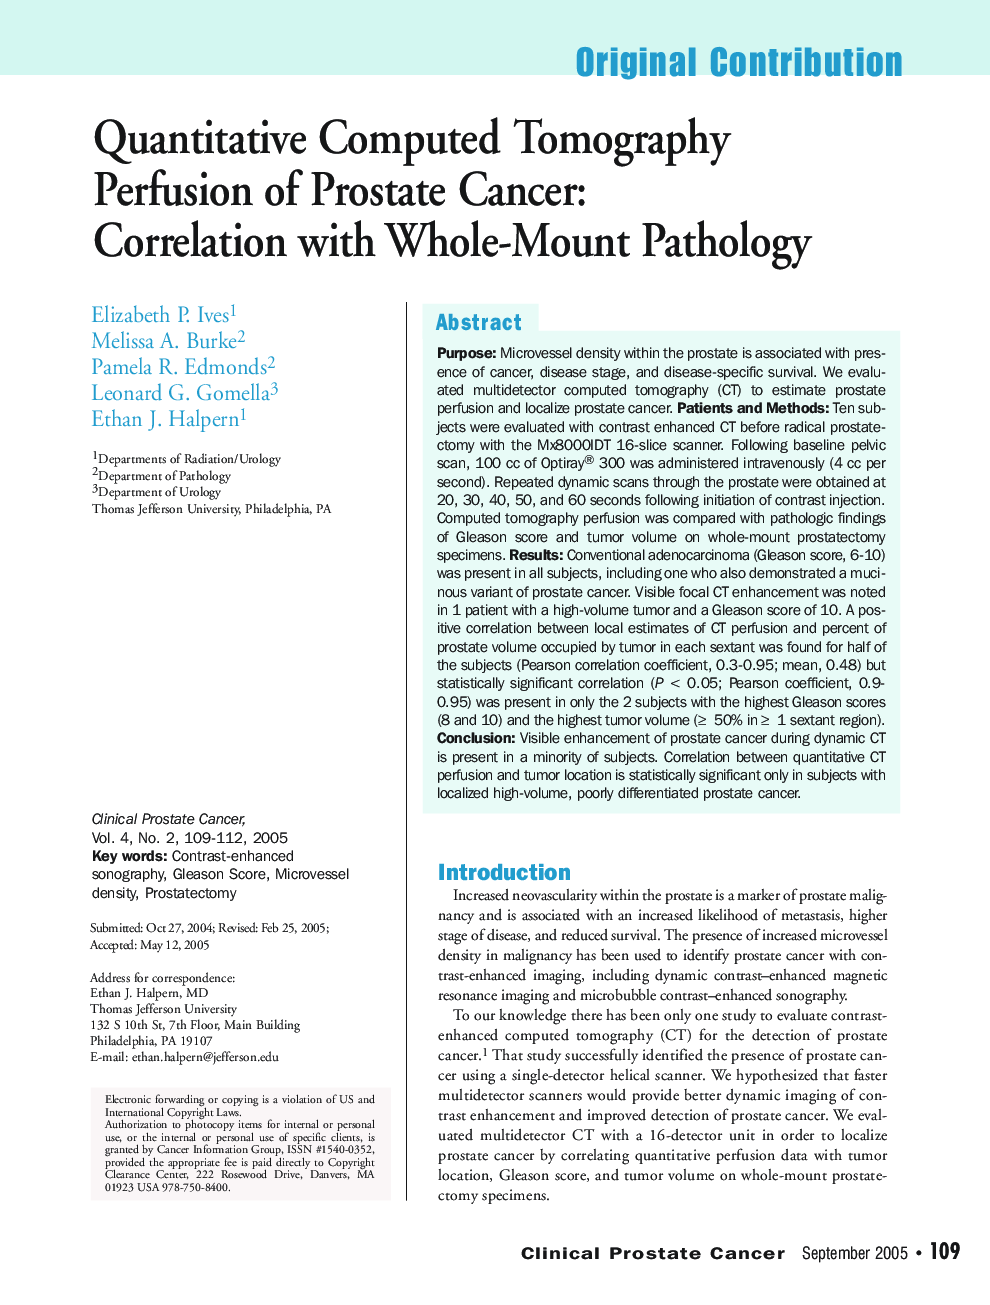 Quantitative Computed Tomography Perfusion of Prostate Cancer: Correlation with Whole-Mount Pathology